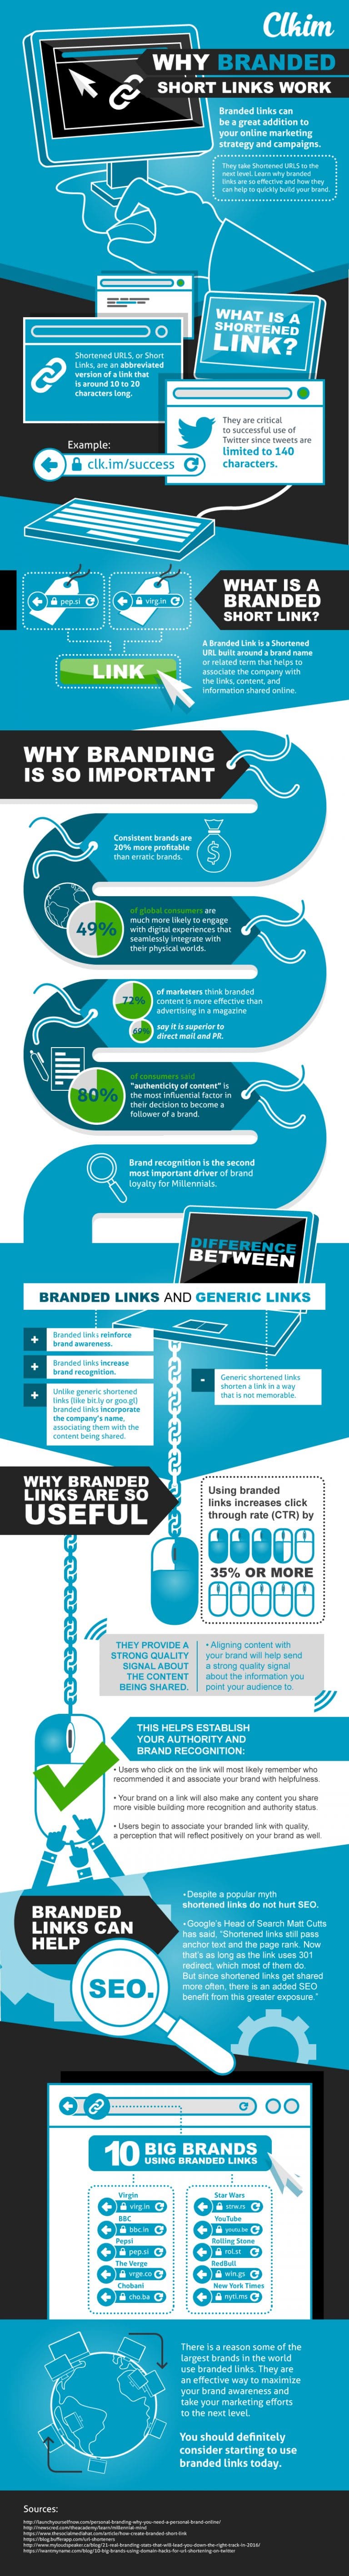 Why Branded Short Links Work